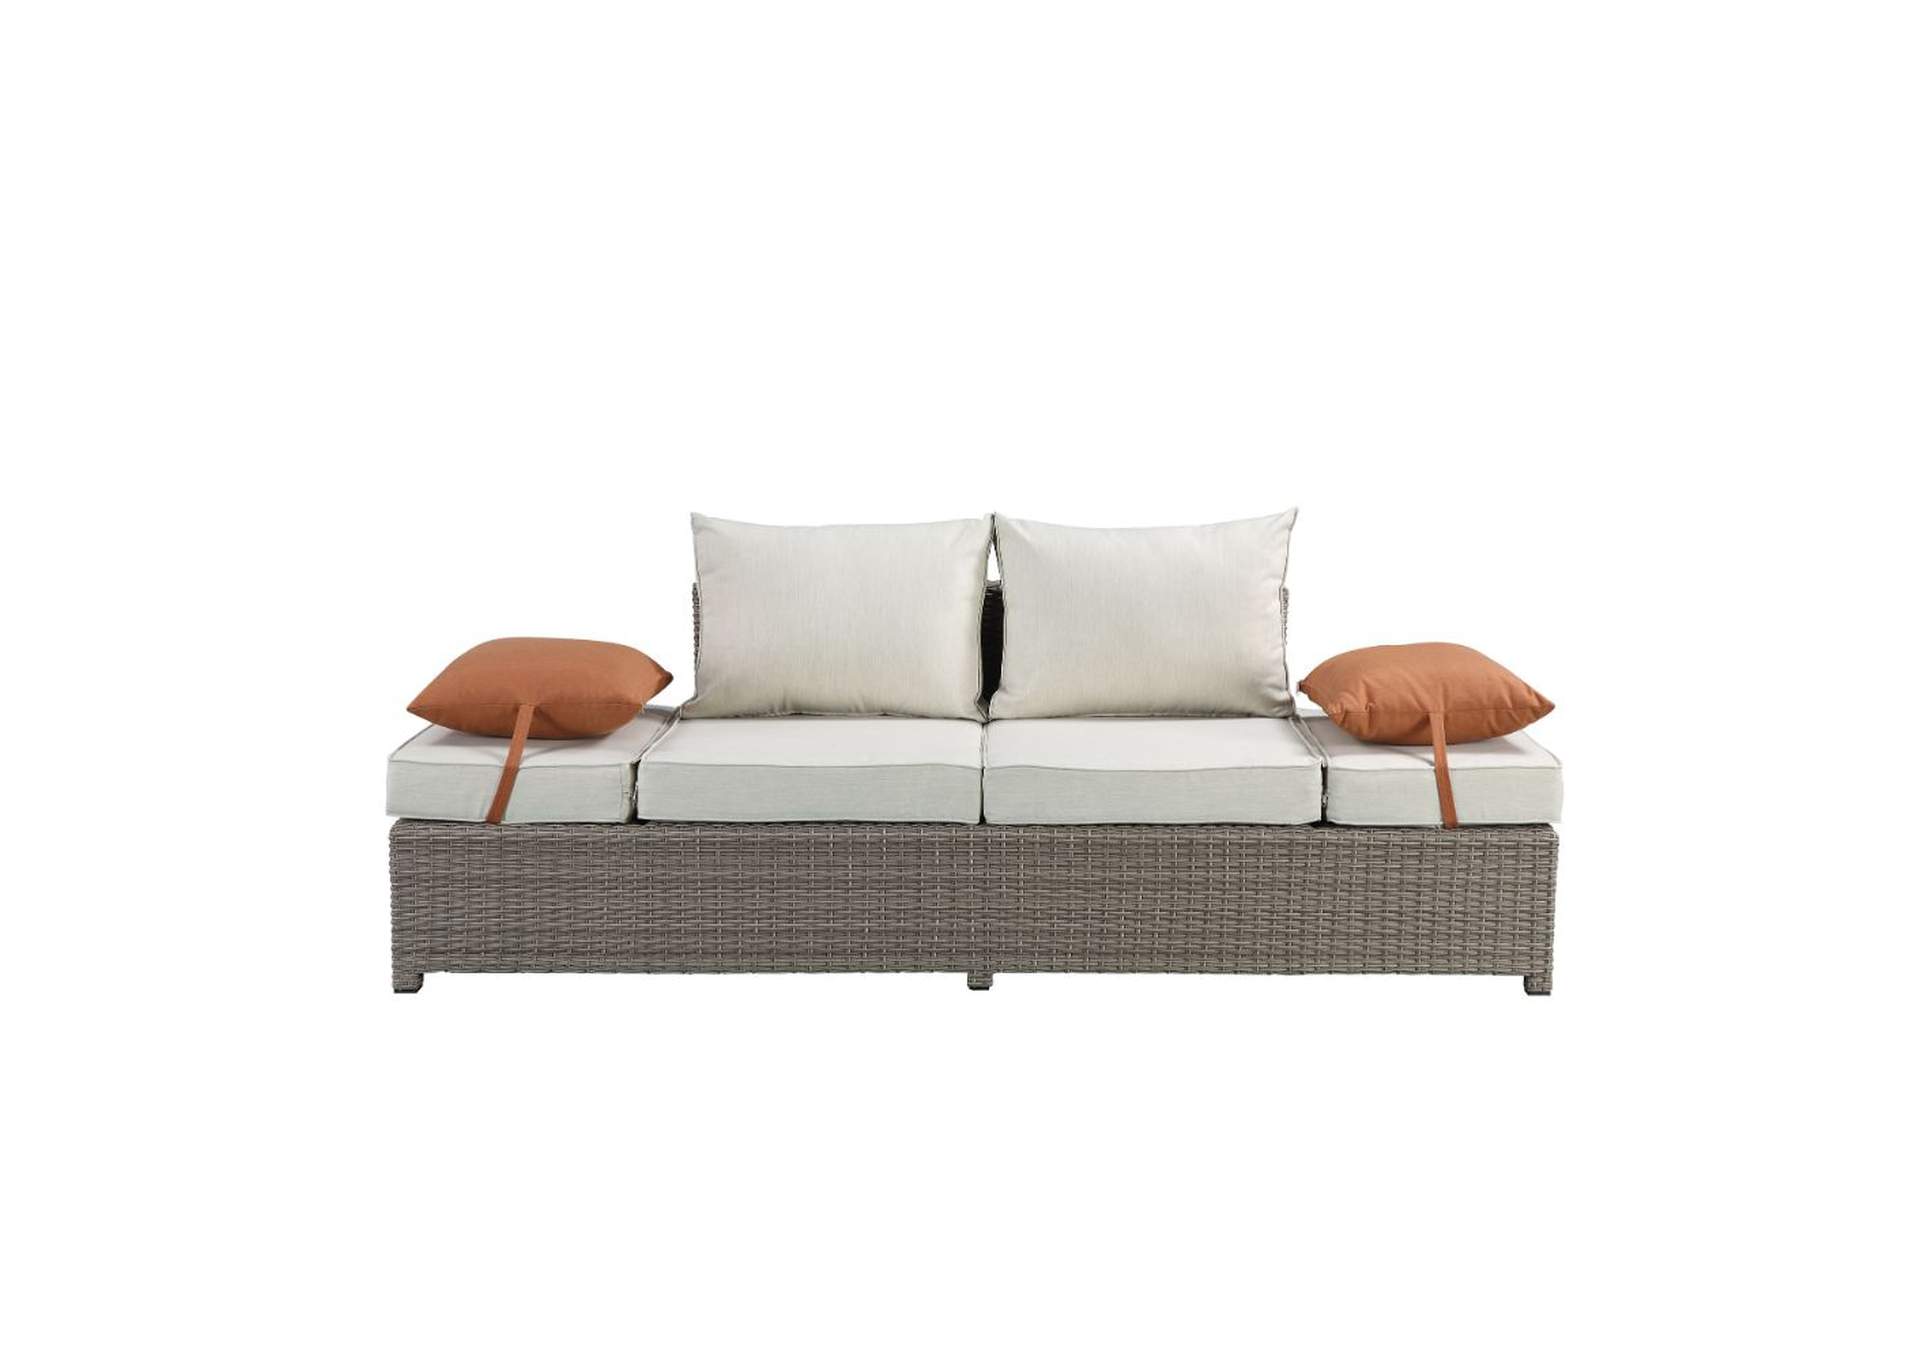 Salena Patio sofa & ottoman,Acme